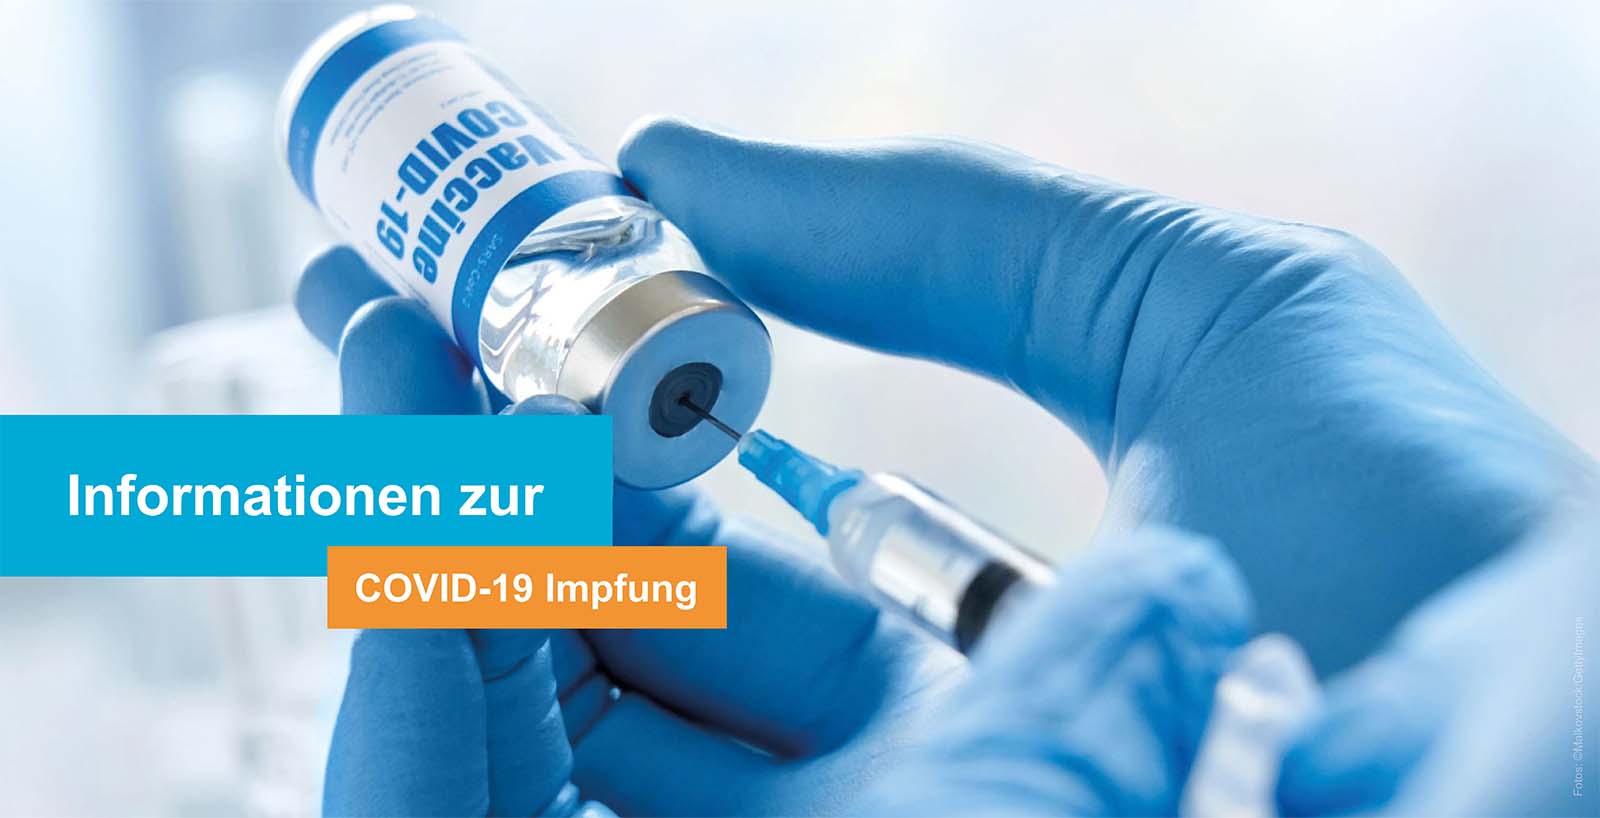 Corona Impfung Thüringen |Dr. med. Kielstein Ambulante Medizinische Versorgung GmbH